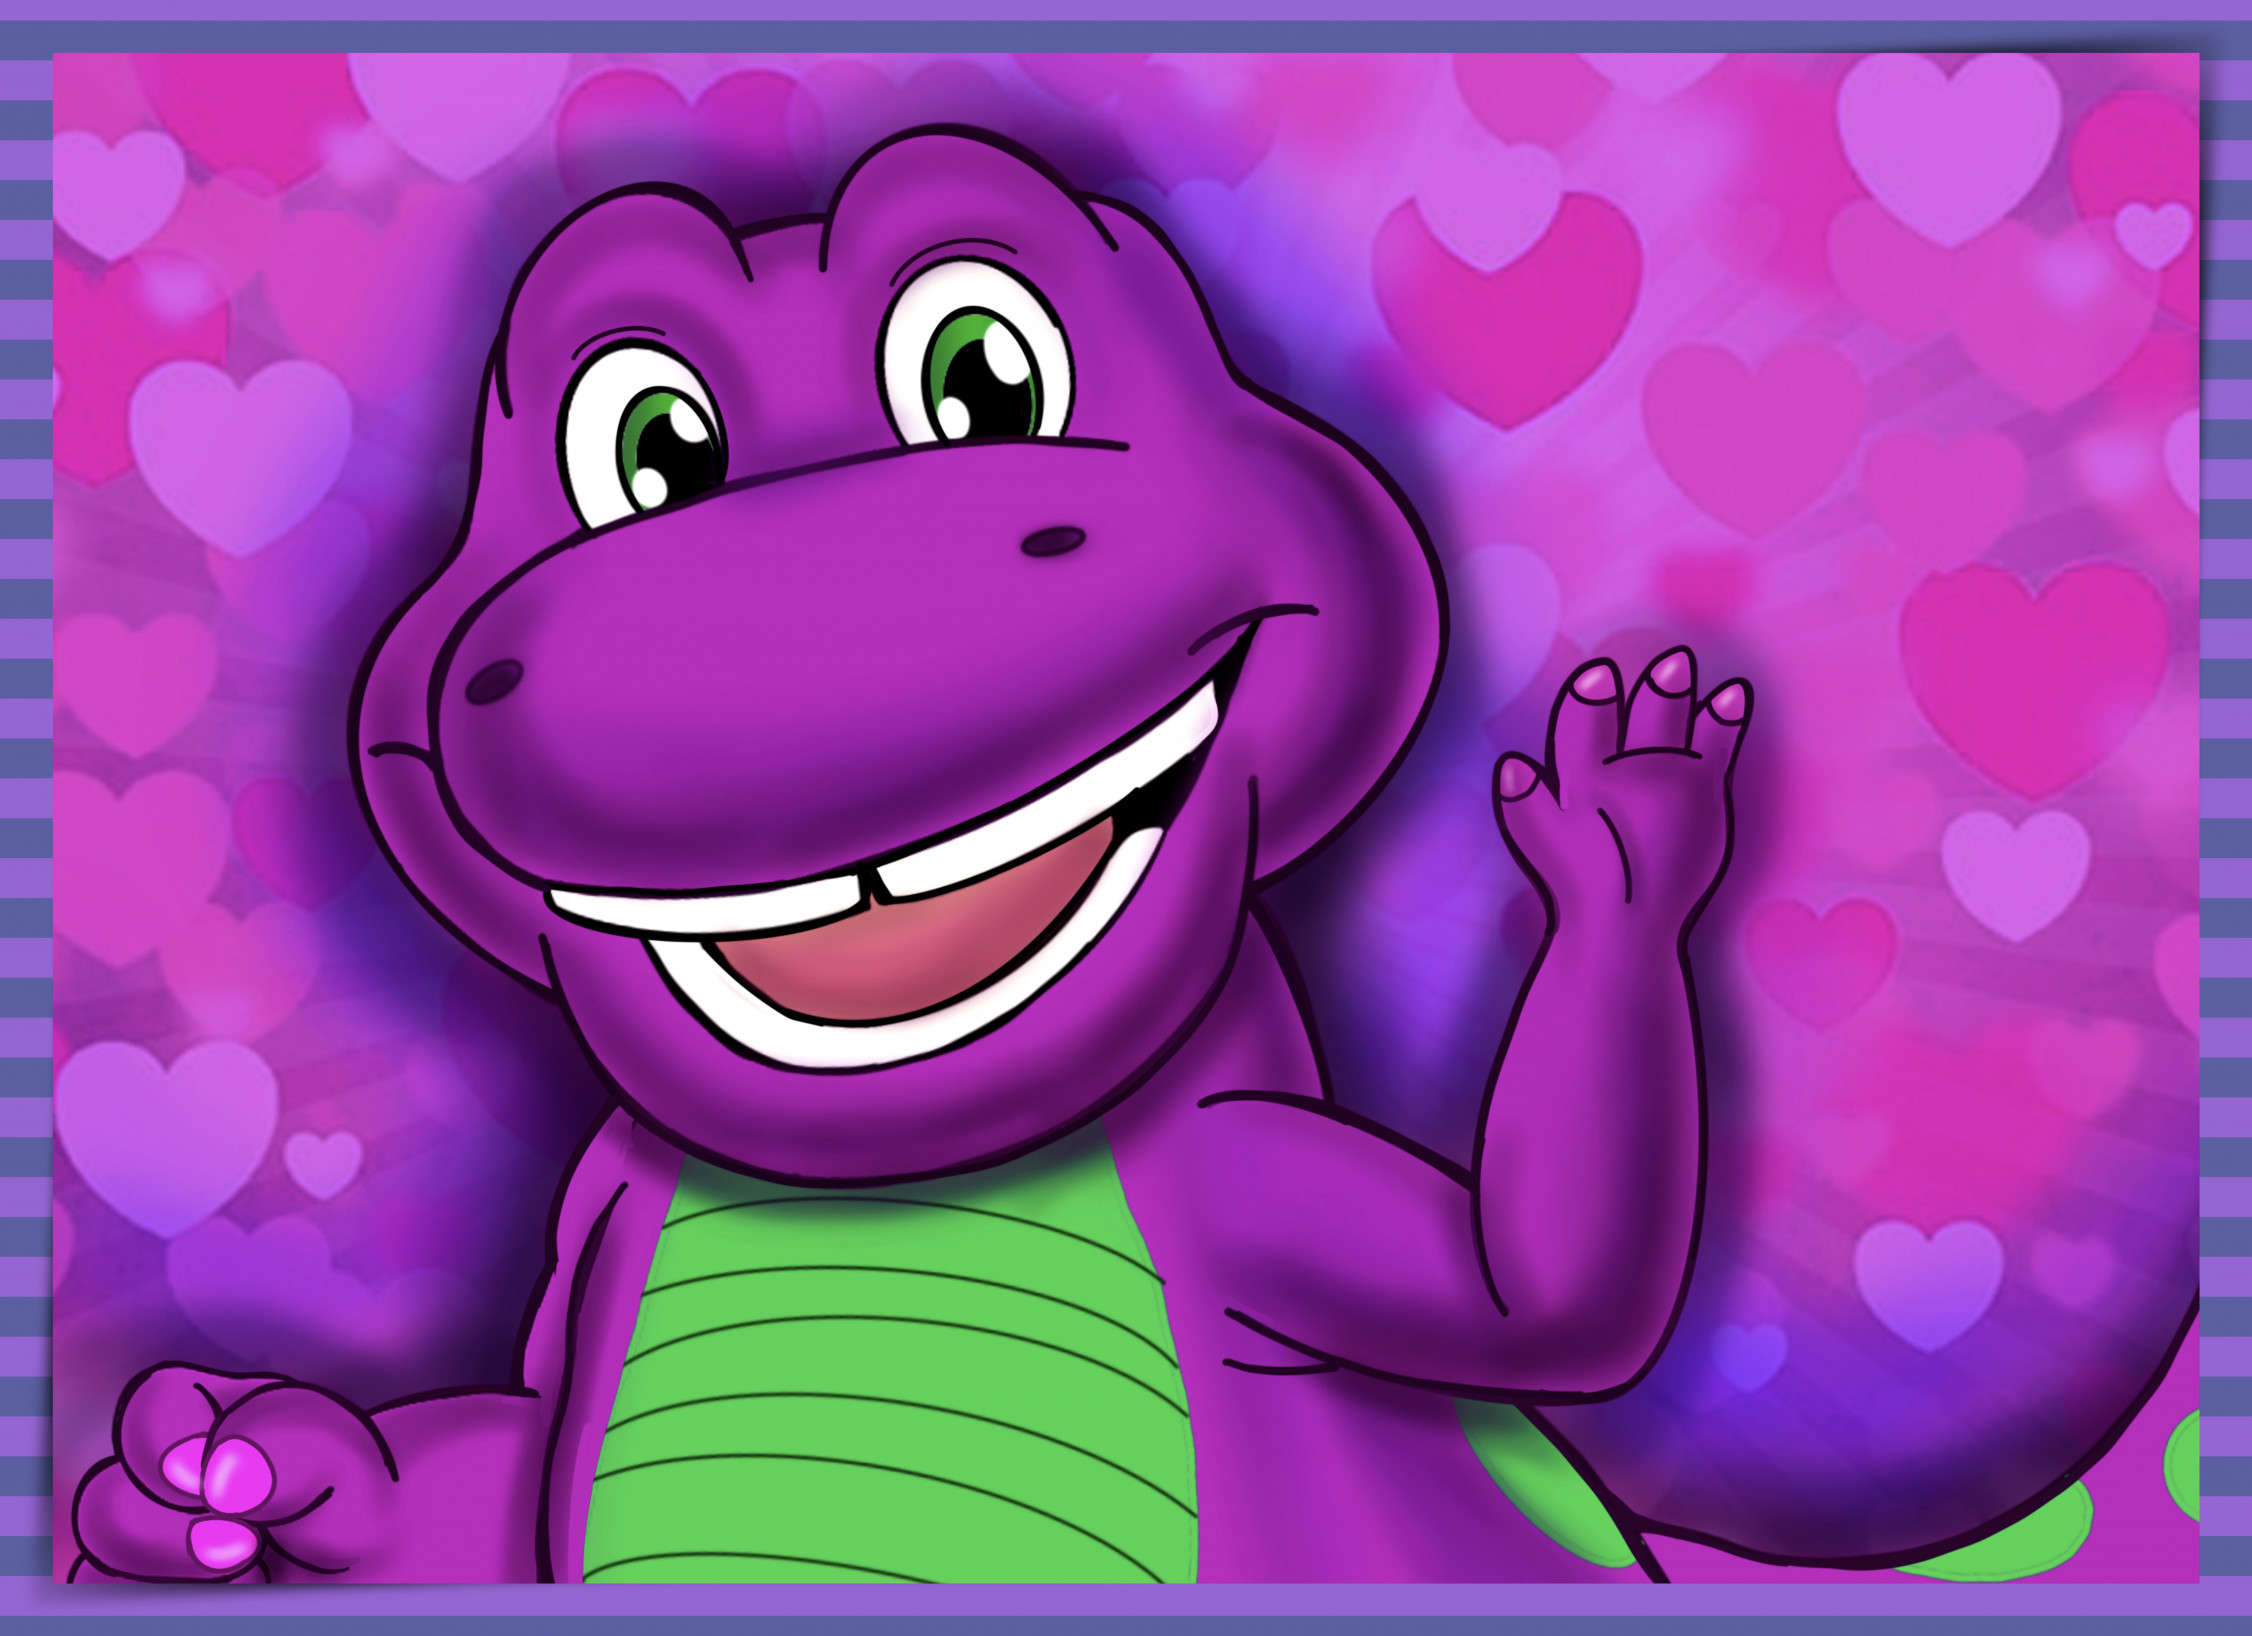 1689145179.yingcartoonman barney new purple dinosaur